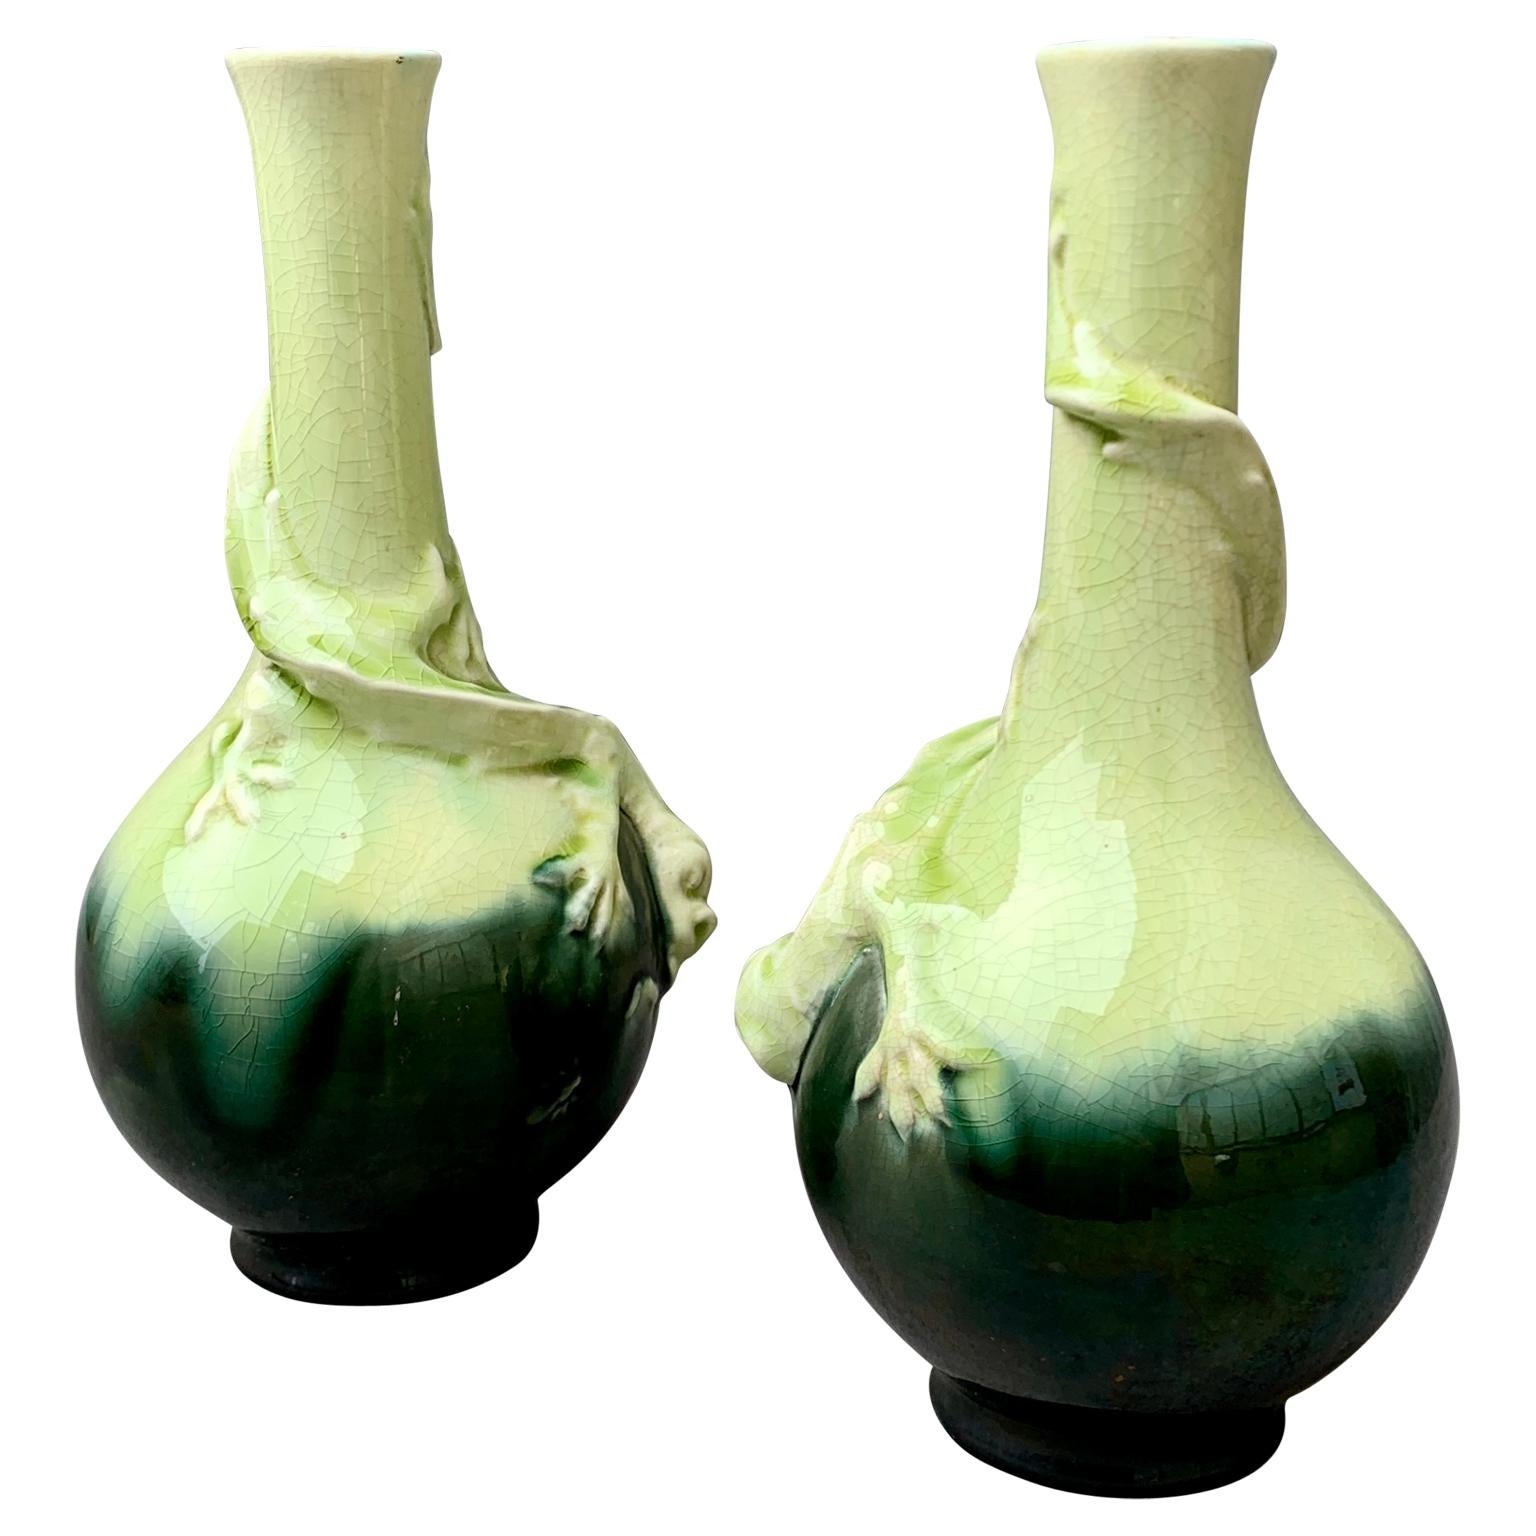  19th Century Pair of Swedish Art Nouveau Majolica Vases  For Sale 2